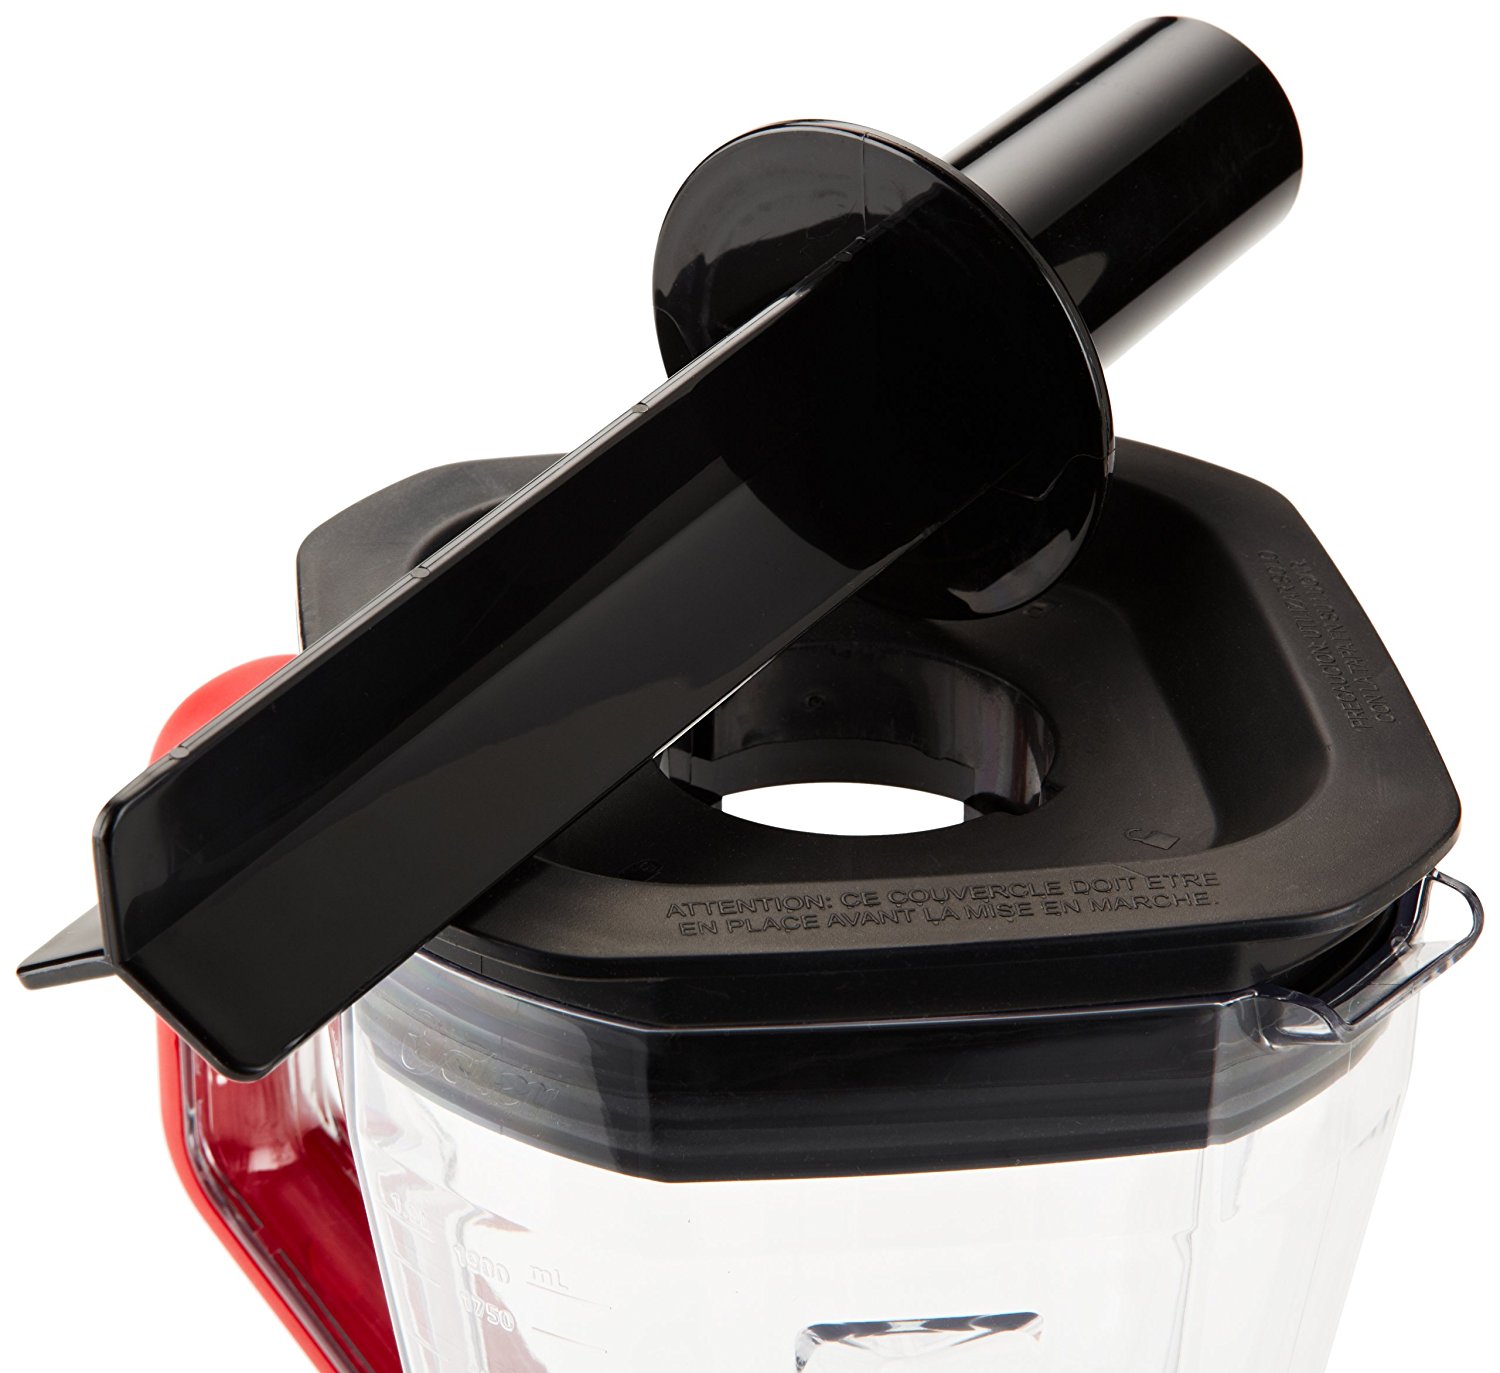 Oster Versa Pro Series 1400 Watt Blender with Low Profile Jar, Black - image 4 of 21